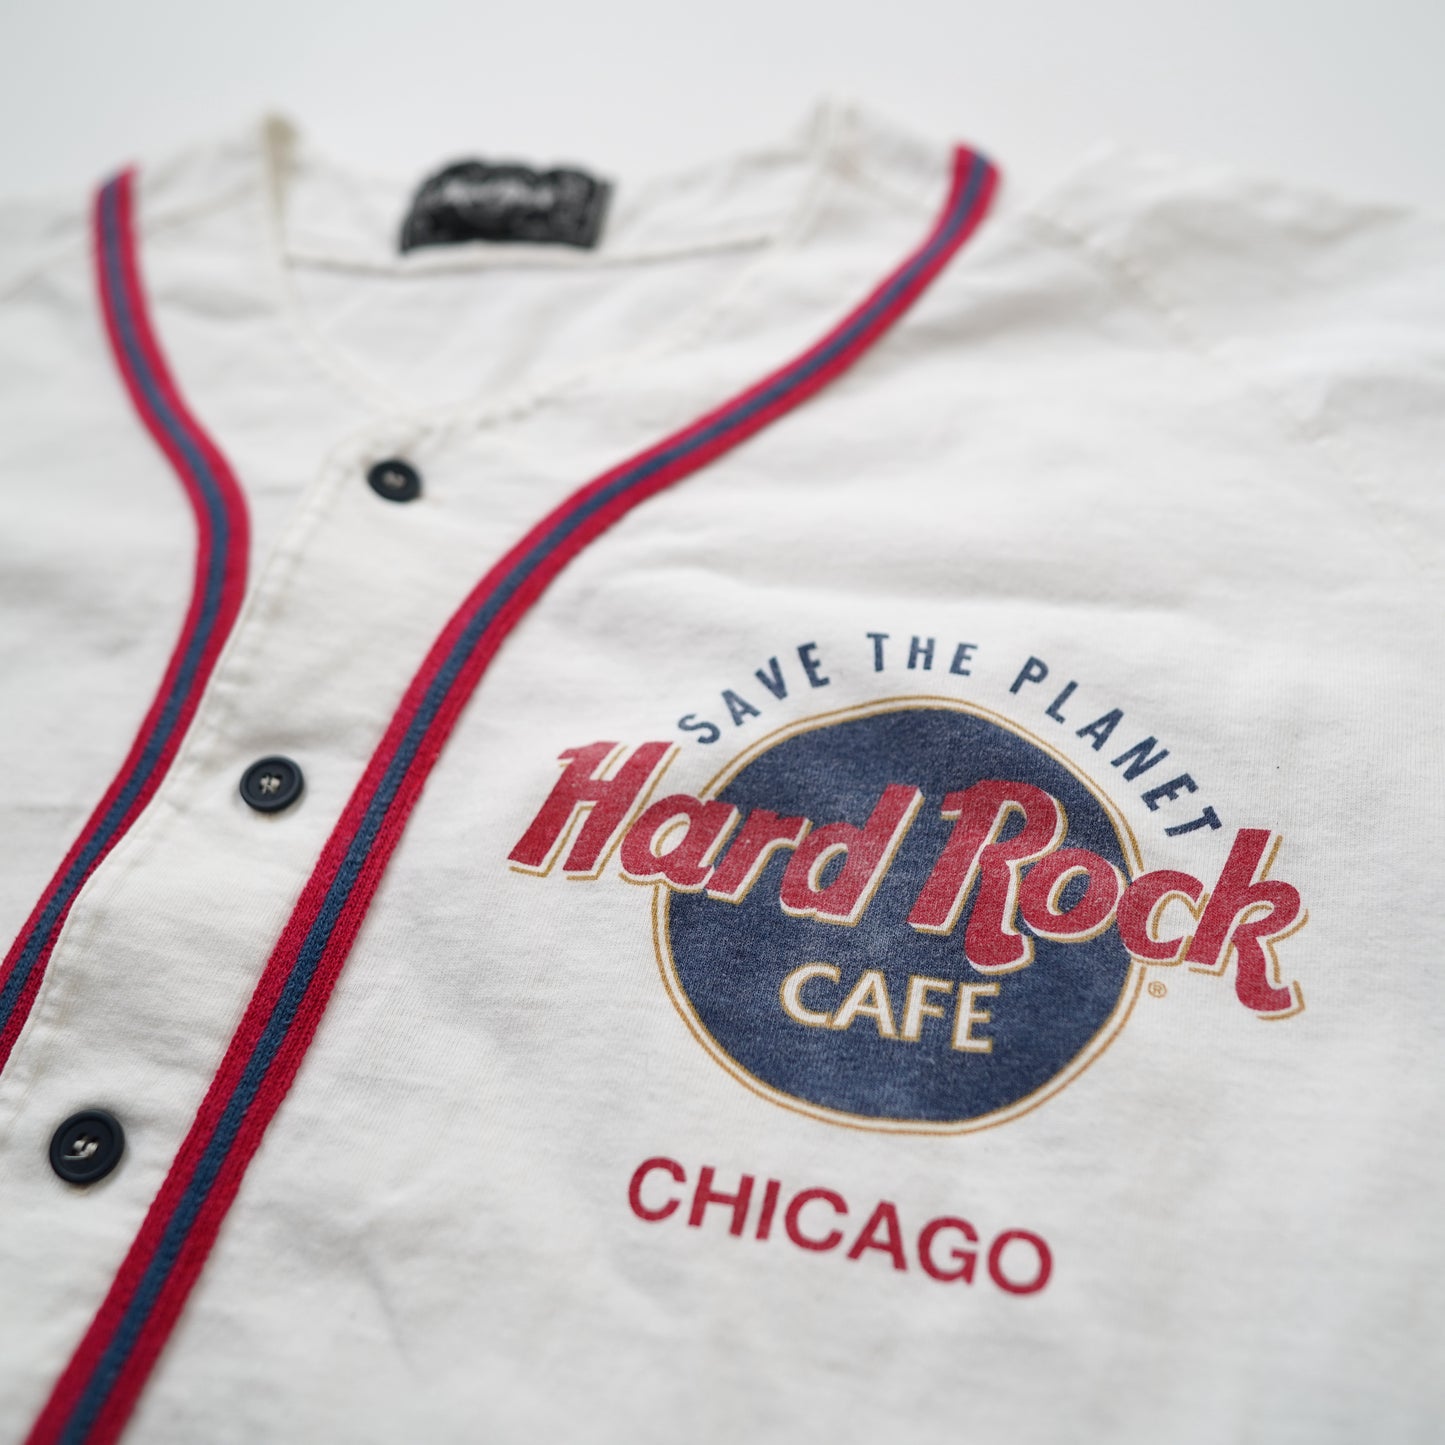 Hard Rock CAFE chicago baseball shirt